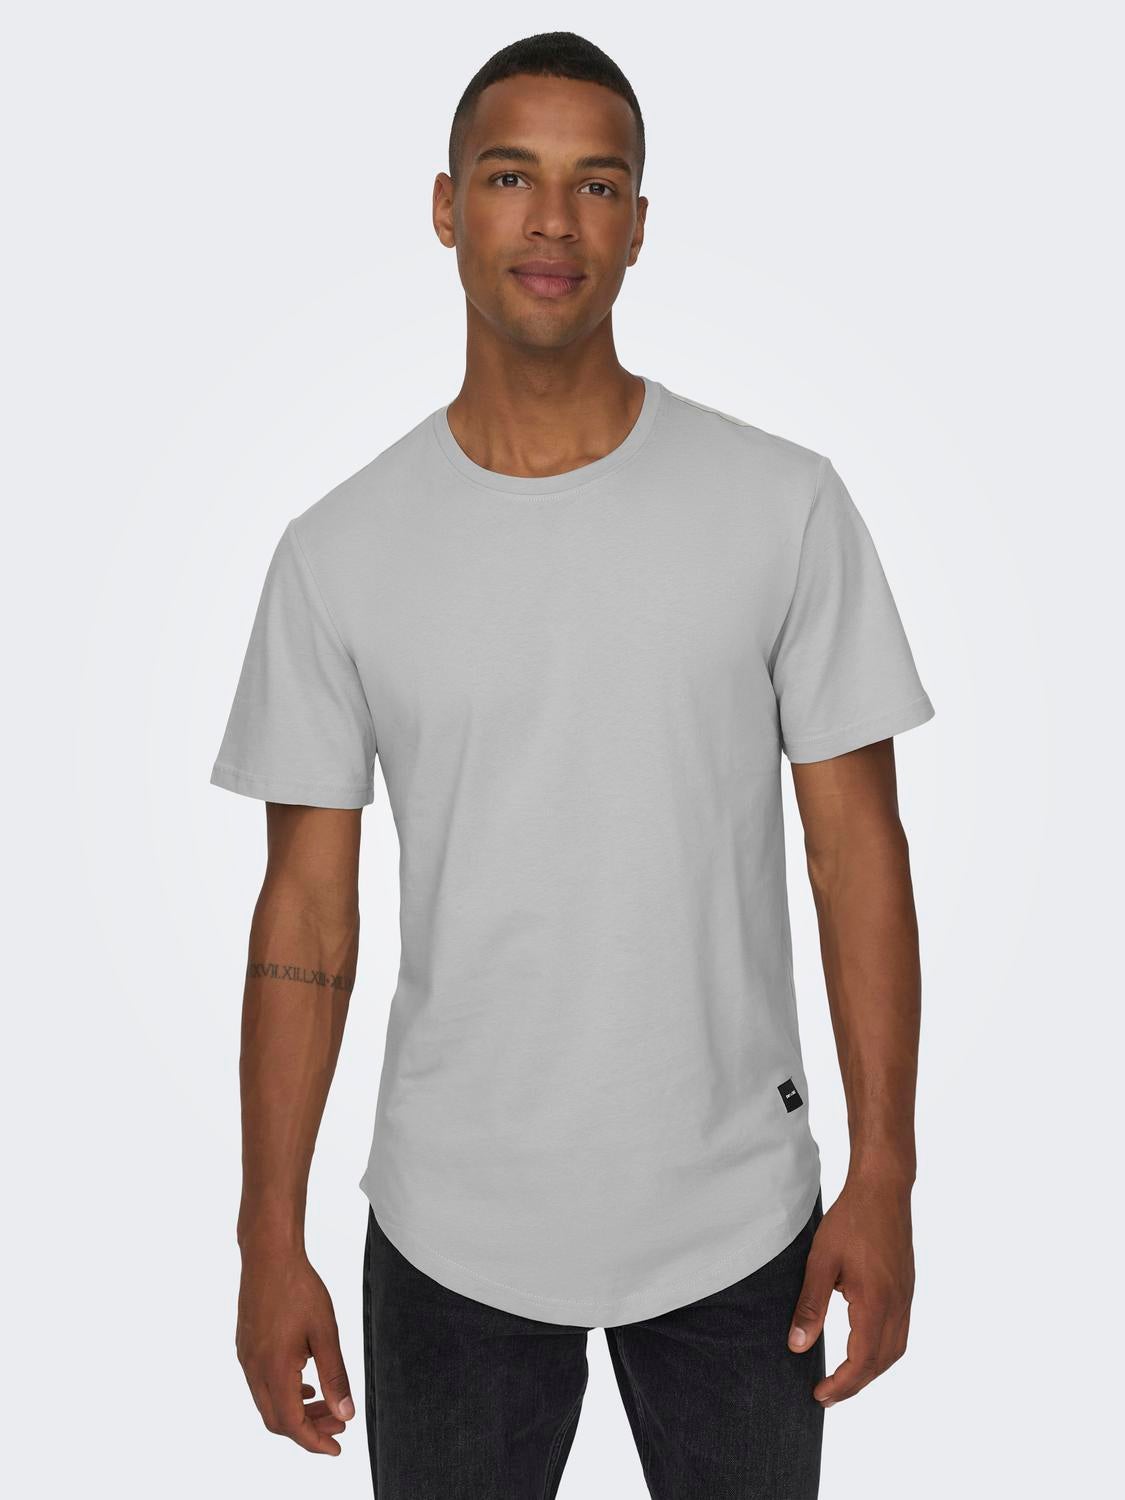 Long Line Fit Round Neck T-Shirt